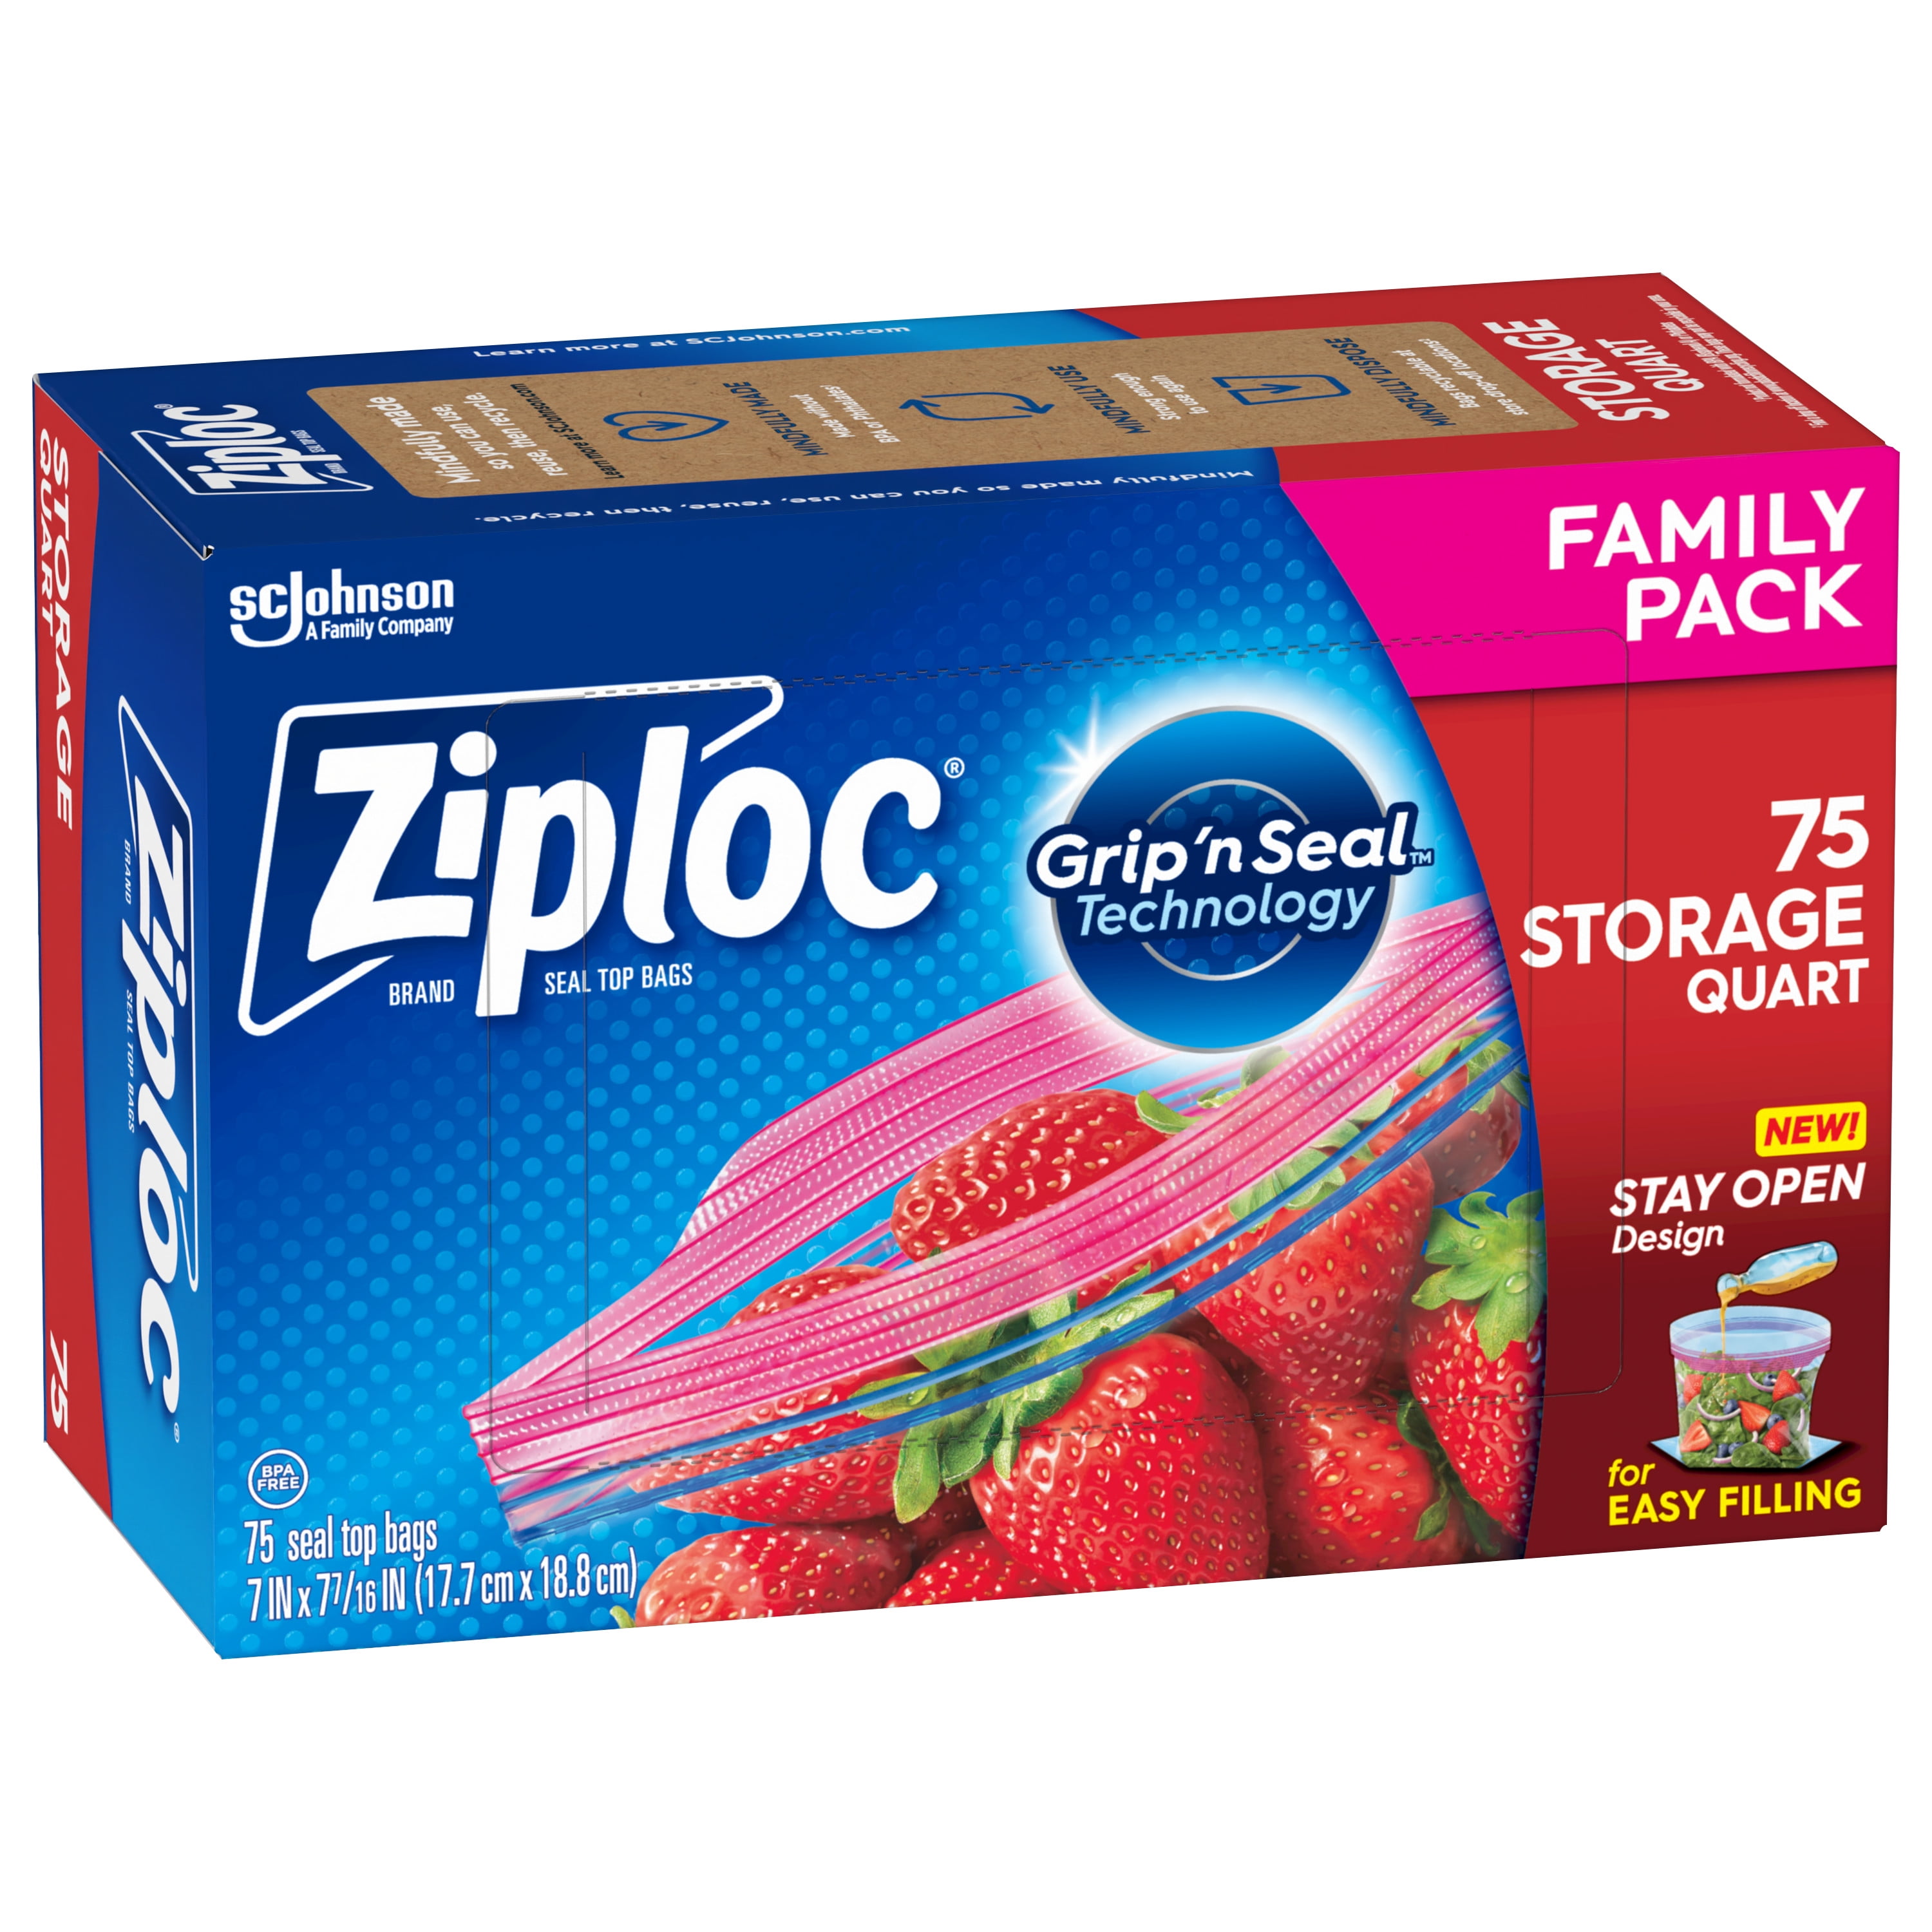 Ziploc Double Zipper Quart Storage Bags (665015CT)